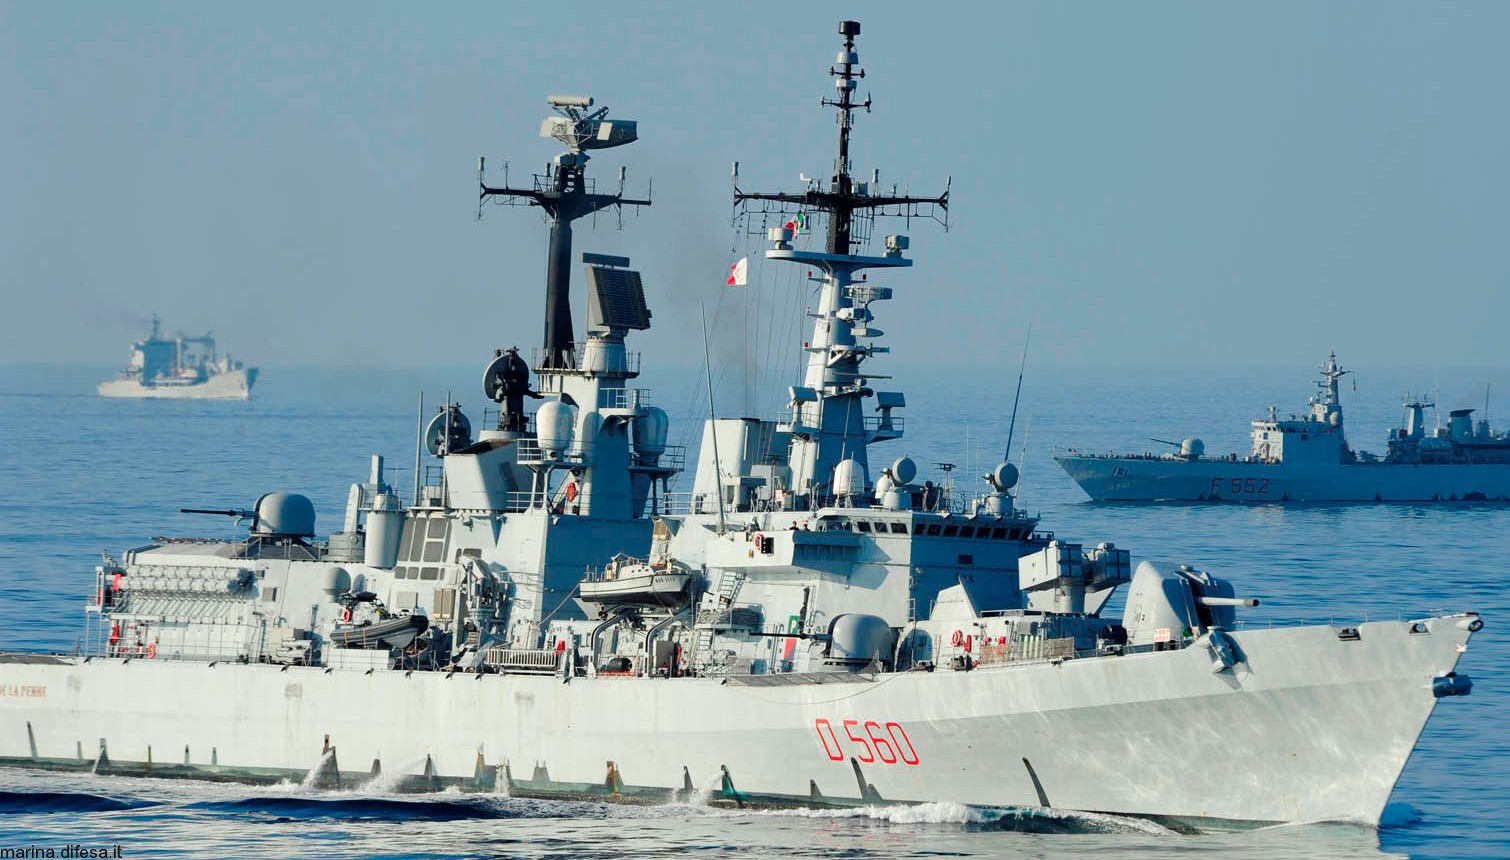 d-560 luigi durand de la penne its nave guided missile destroyer ddg italian navy marina militare 63